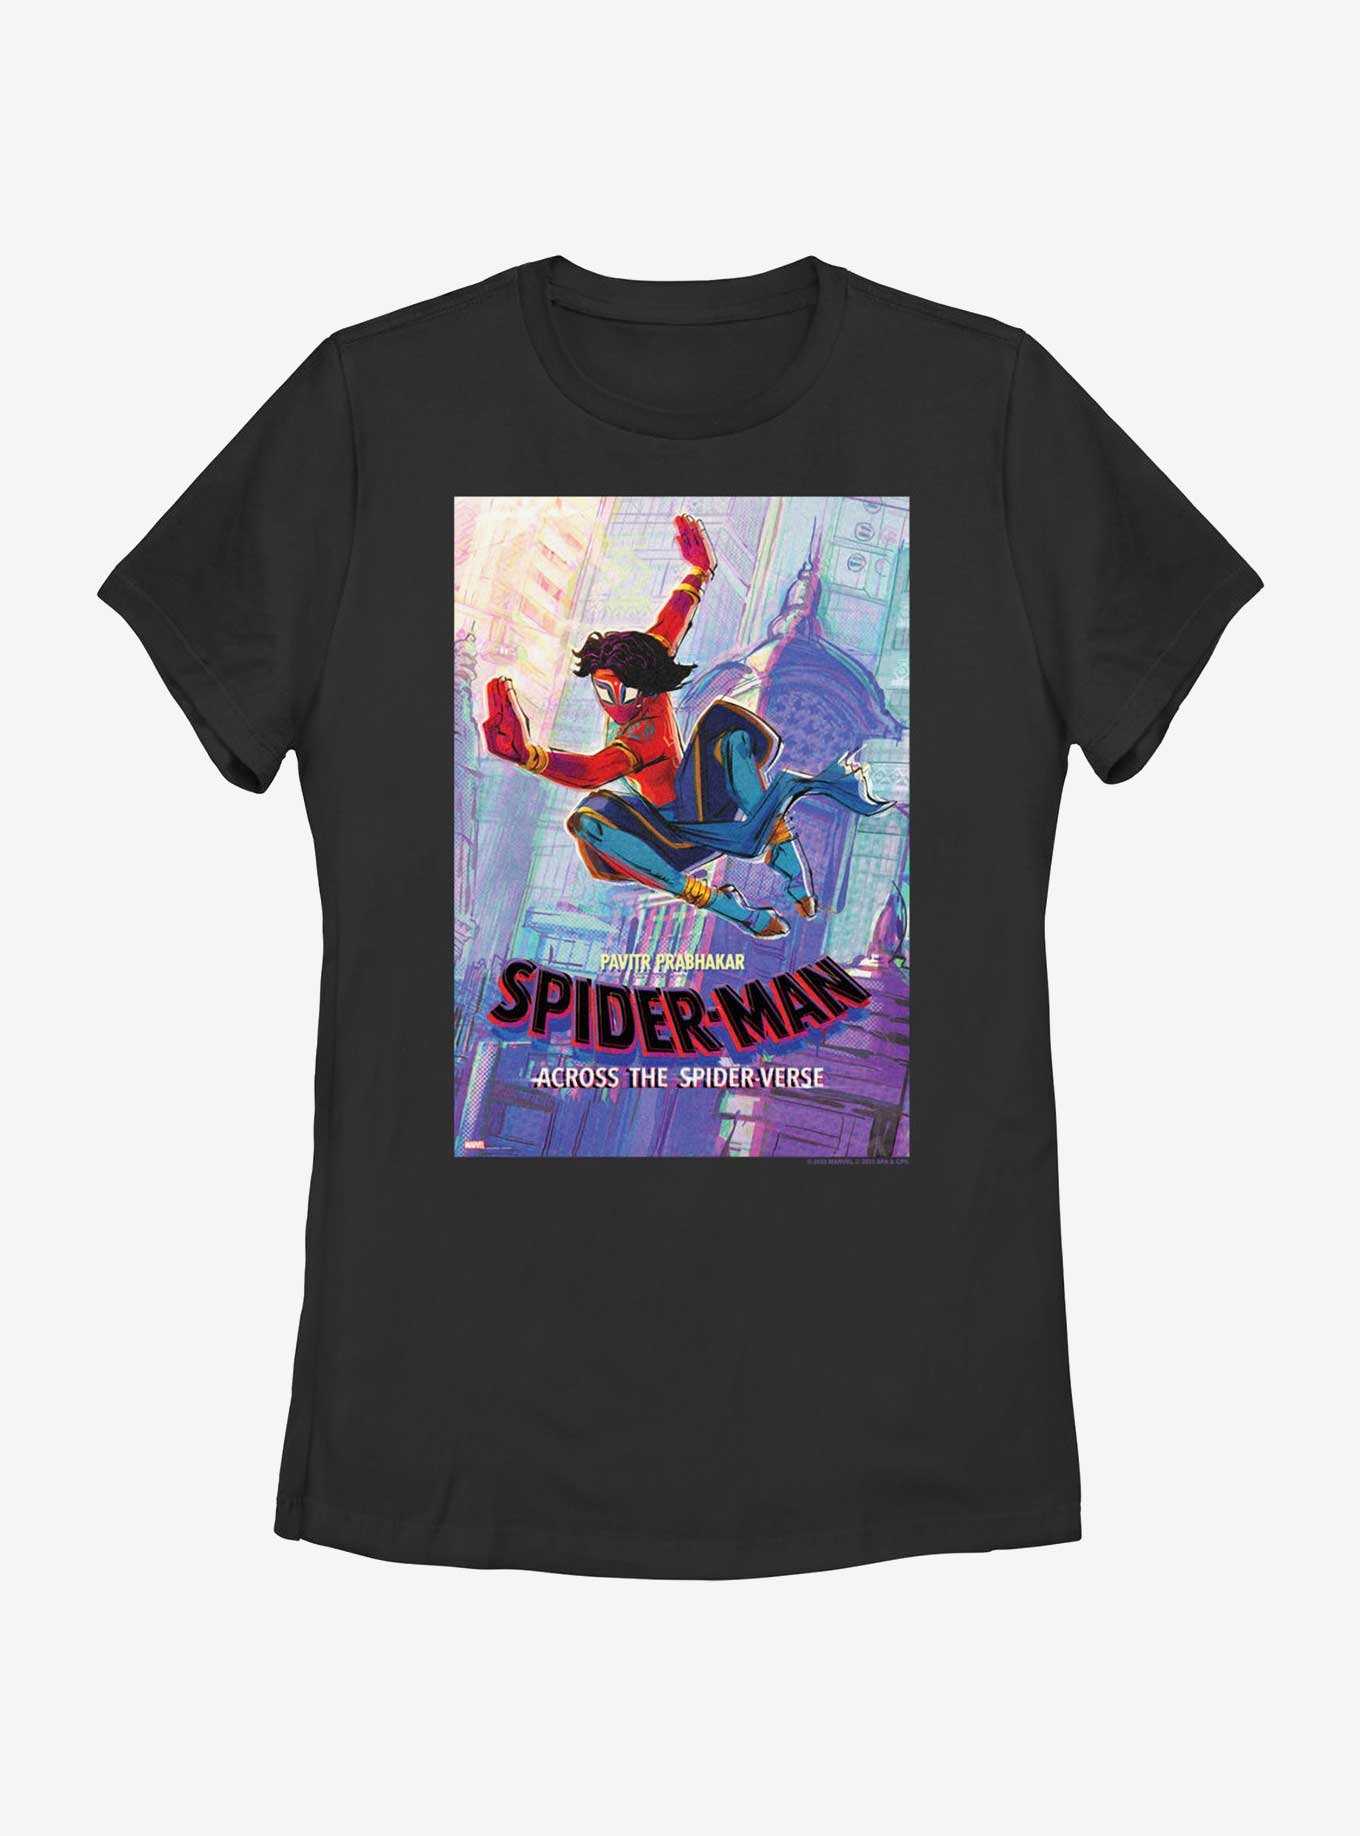 Spider-Man: Across The Spider-Verse Pavitr Prabhakar Poster Womens T-Shirt, , hi-res